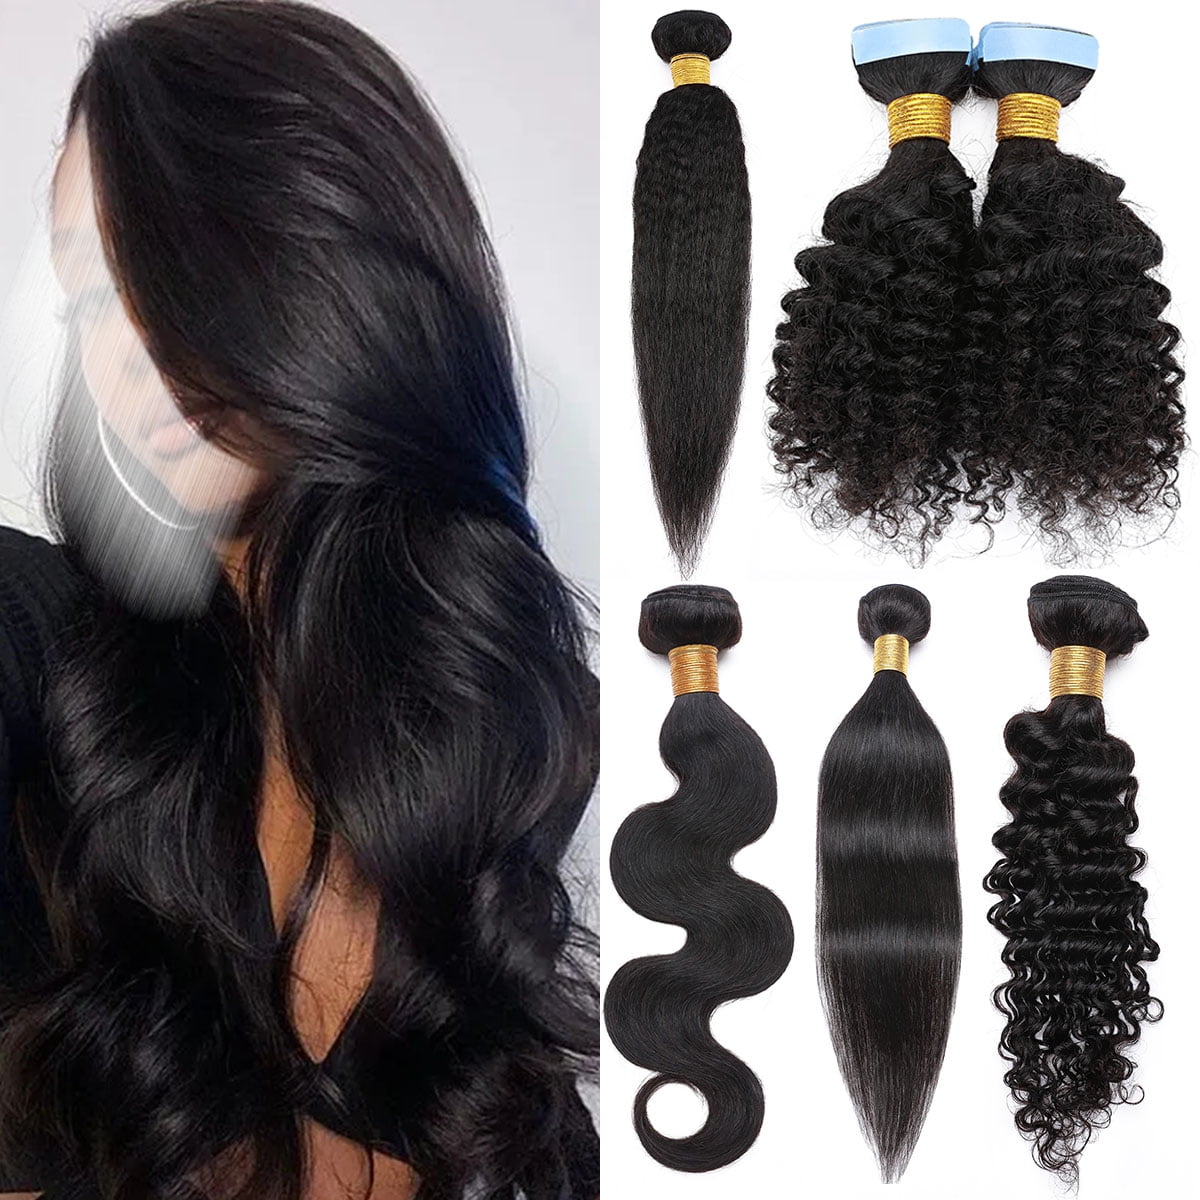 Yaki Weave  Human Hair Extensions  8 Inch  Black  Blonde 1B27   Beauty Hair Products Ltd